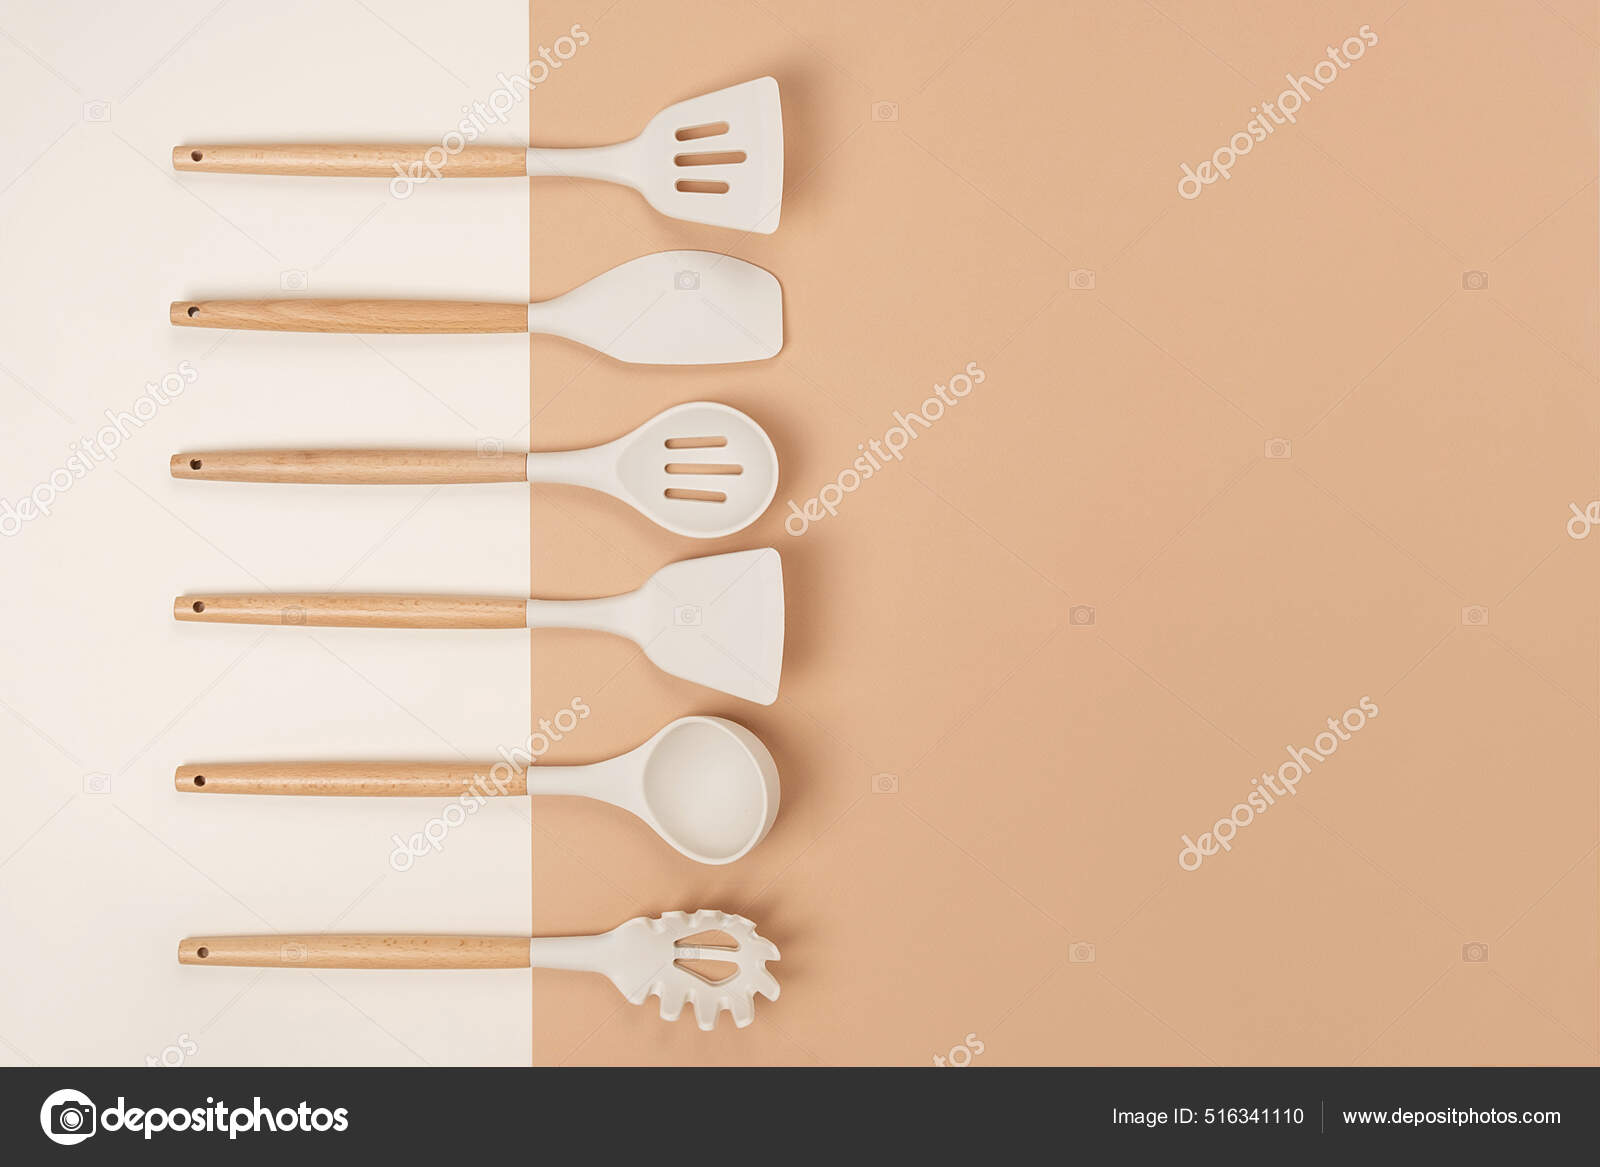 https://st.depositphotos.com/25011698/51634/i/1600/depositphotos_516341110-stock-photo-cooking-utensil-set-silicone-kitchen.jpg